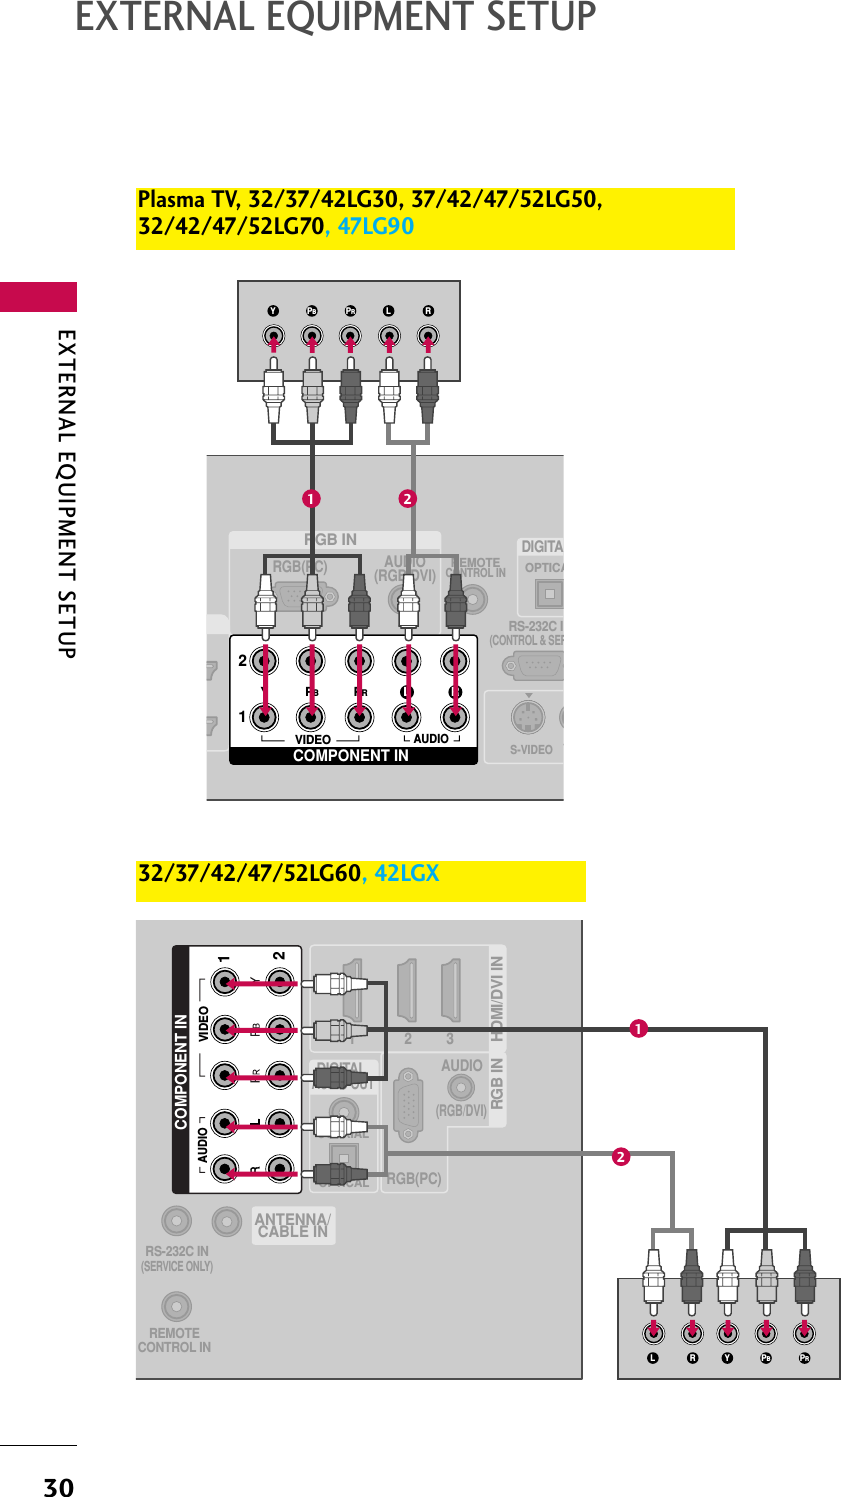 EXTERNAL EQUIPMENT SETUP30EXTERNAL EQUIPMENT SETUPRGB INAUDIO(RGB/DVI)RGB(PC)REMOTECONTROL INRS-232C I(CONTROL &amp; SEROPTICADIGITAVS-VIDEOCOMPONENT IN12VIDEOLYPBPRRAUDIOY L RPBPR1 2(RGB/DVI)AUDIORGB(PC)REMOTECONTROL INRS-232C IN(SERVICE ONLY)OPTICALCOAXIALDIGITAL AUDIO OUT1 2 3HDMI/DVI IN RGB IN ANTENNA/CABLE INCOMPONENT IN21VIDEOAUDIOYL R PBPR1232/37/42/47/52LG60, 42LGXPlasma TV, 32/37/42LG30, 37/42/47/52LG50,32/42/47/52LG70, 47LG90